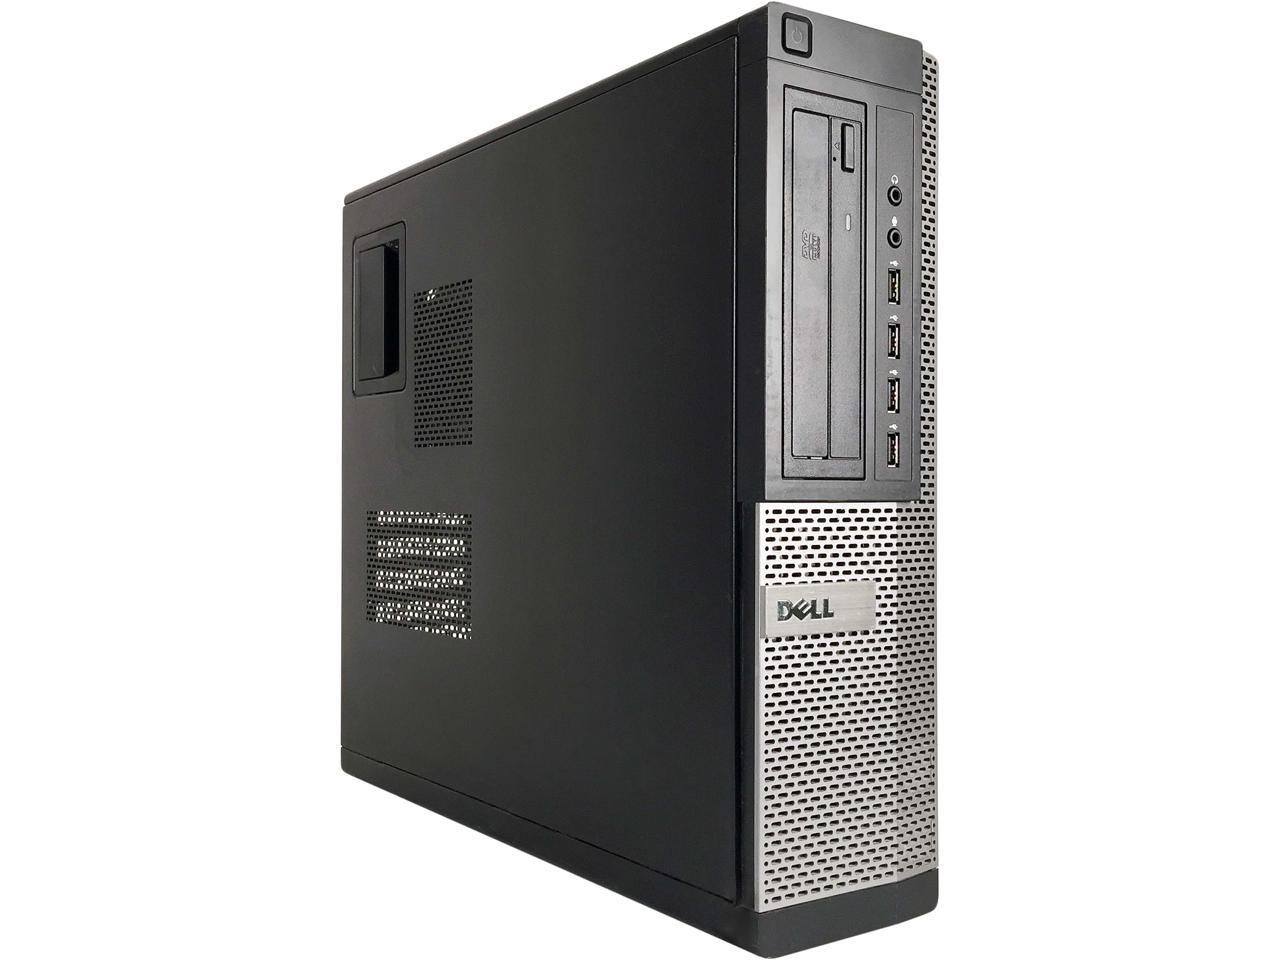 Dell Grade A OptiPlex 790 Desktop Computer, Intel Core i7 2600 (3.40 GHz), 12GB DDR3, 256G SSD, DVD, USB WIFI Adapter, USB Bluetooth Adapter, Windows 10 Home 64-bit Multi-language